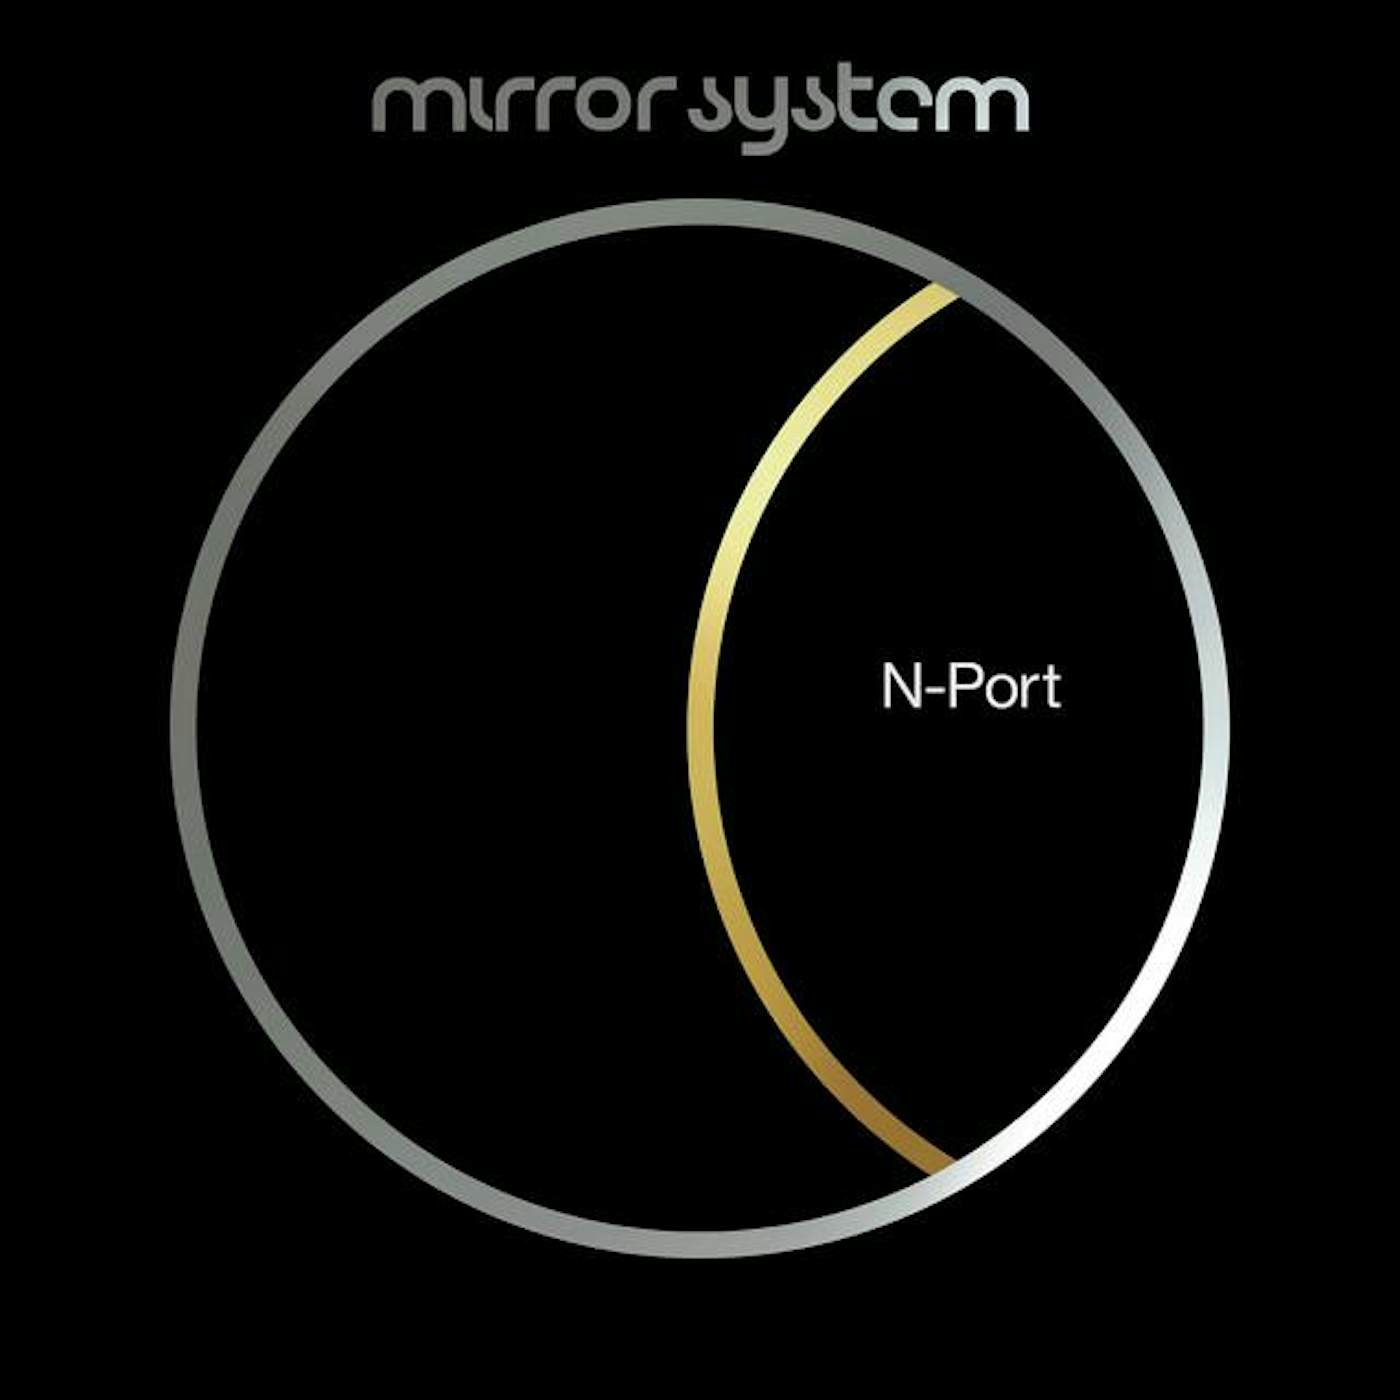 Mirror System